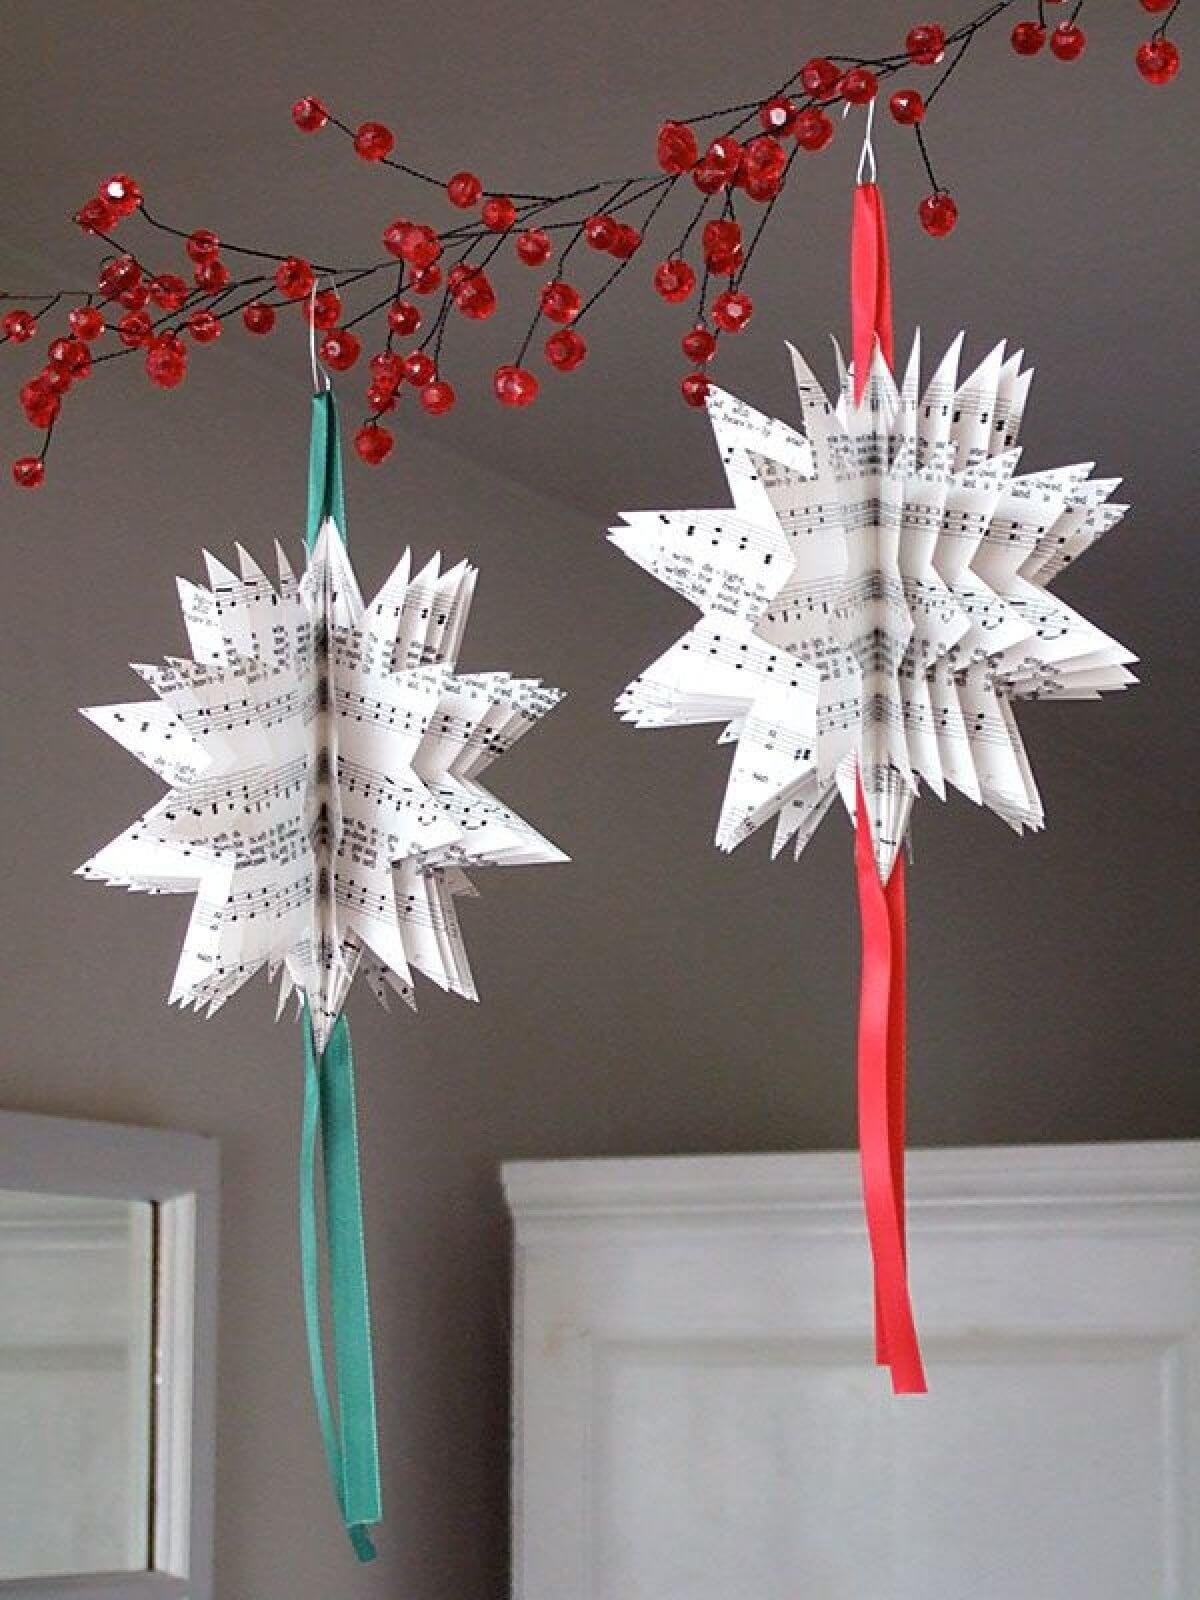 DIY Christmas decorations